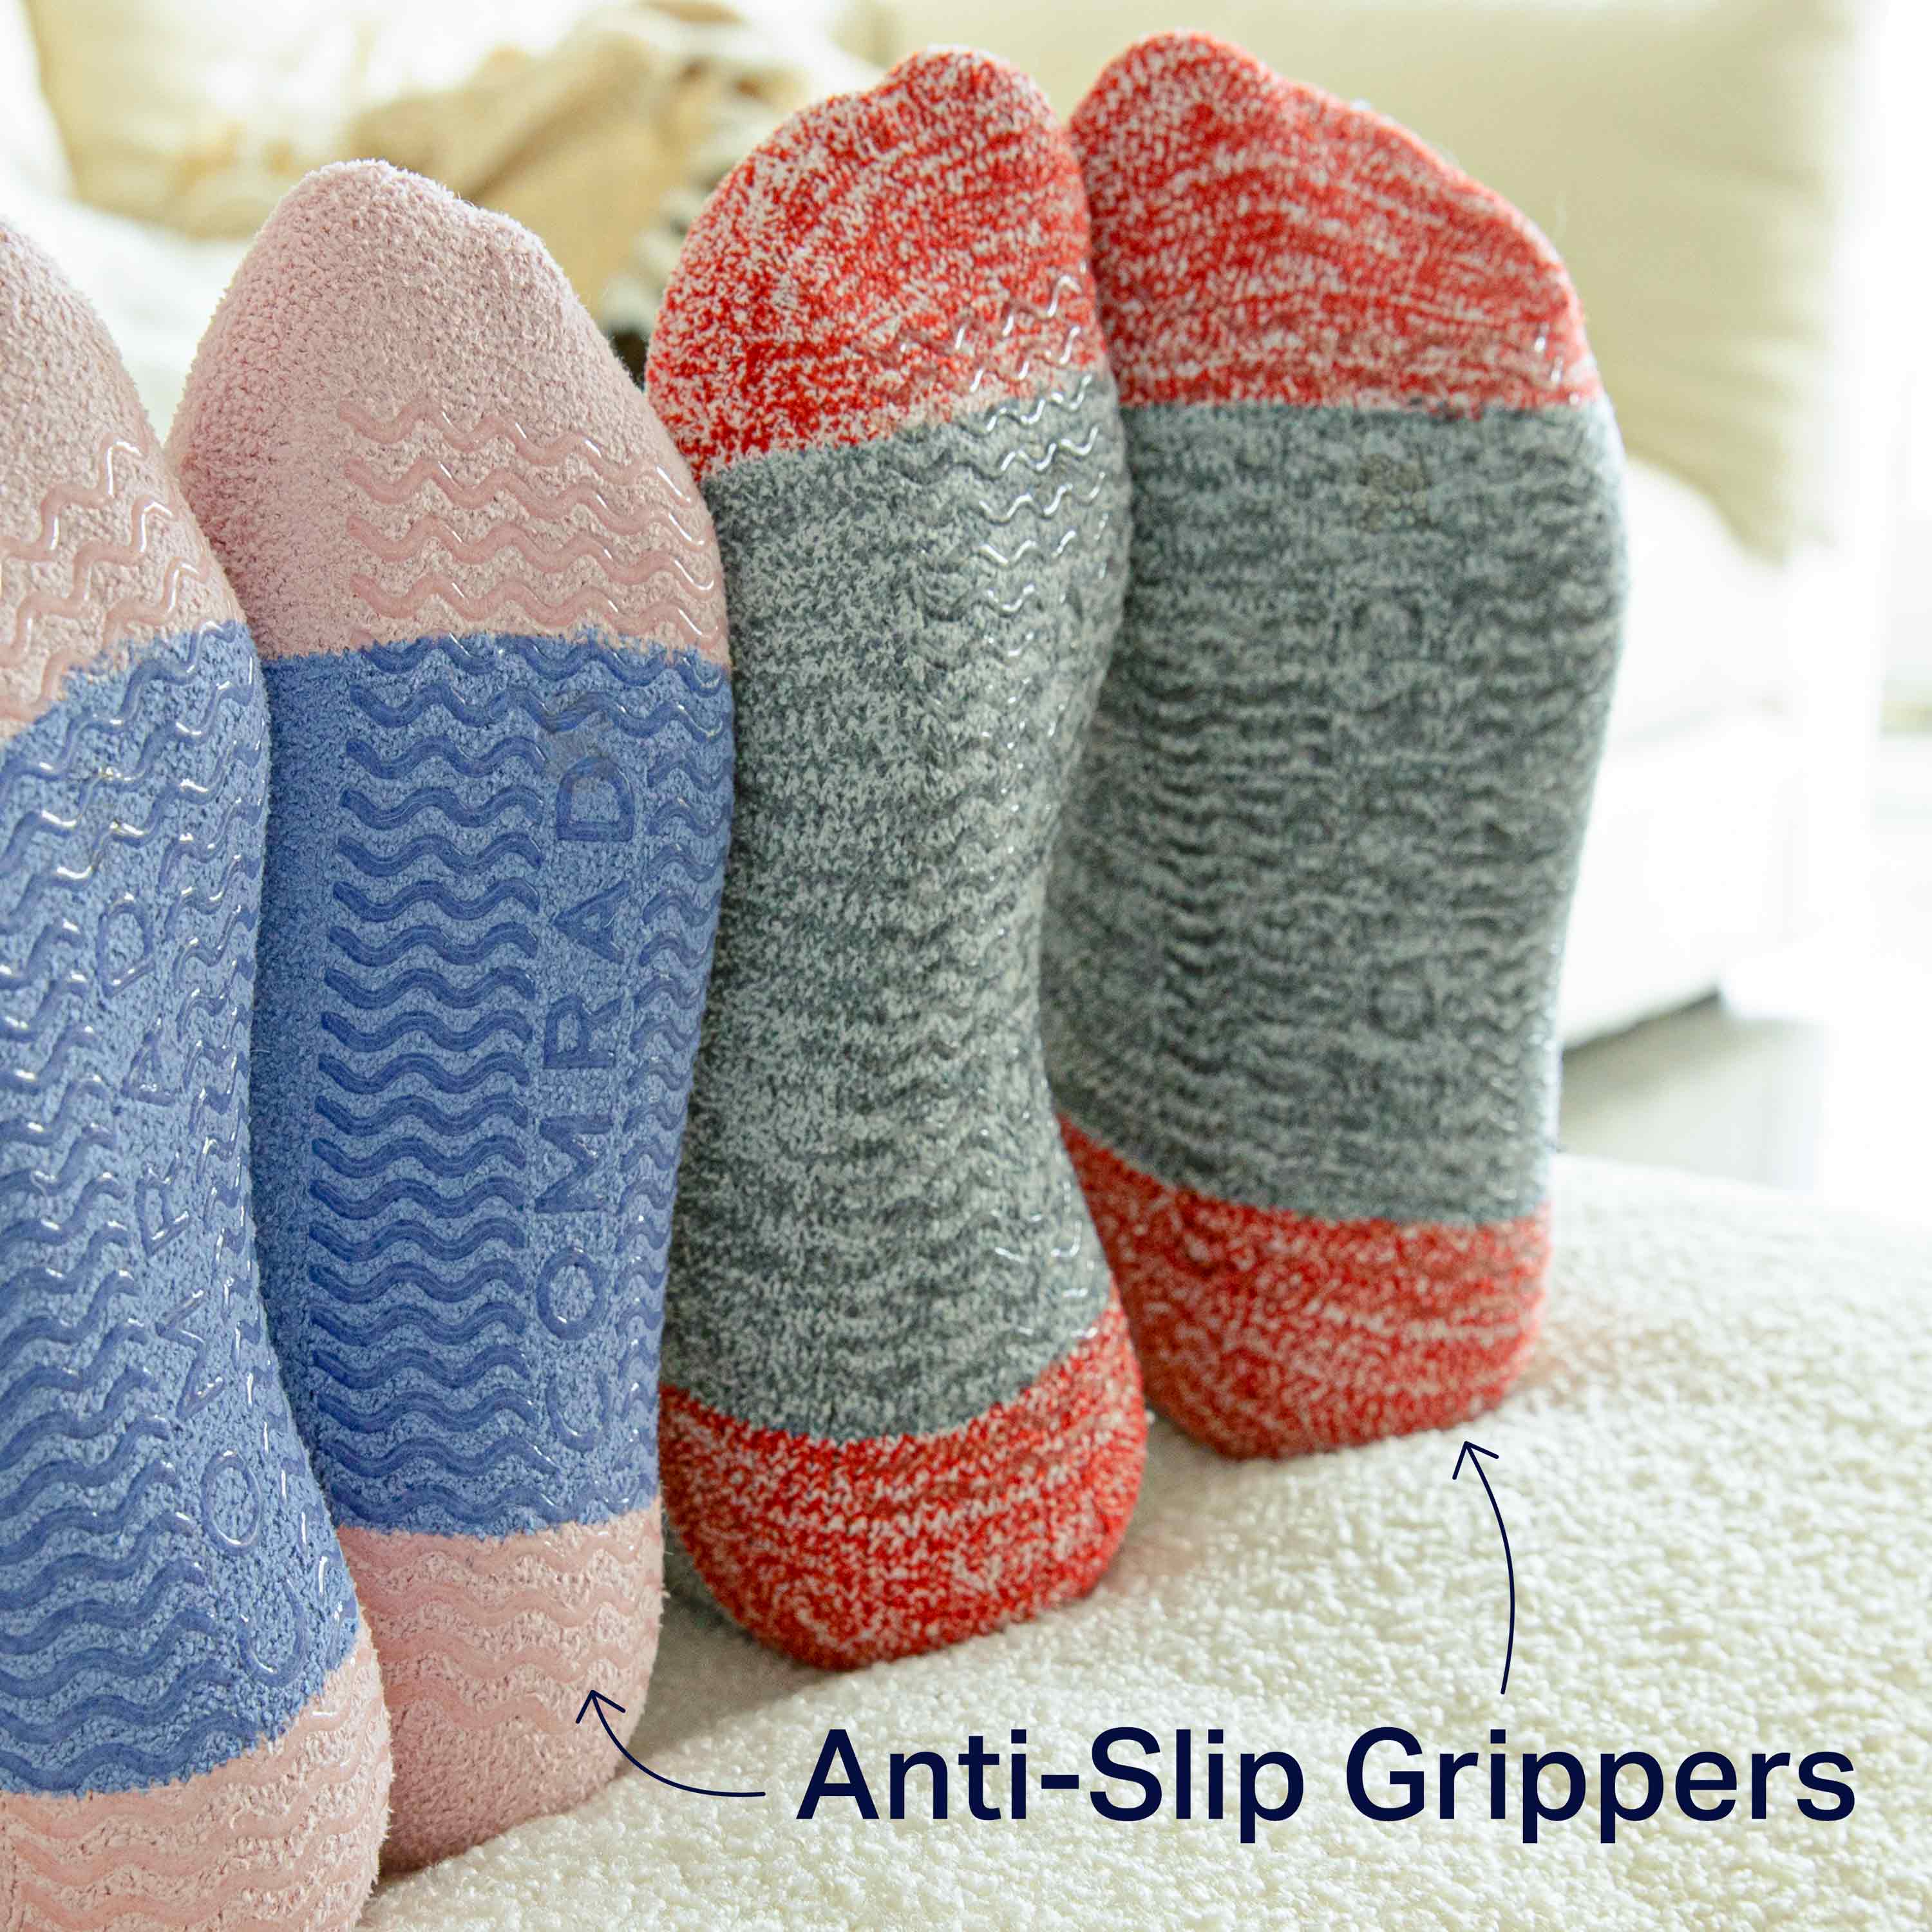 Non Skid / Slip Socks Double Gripper - Hospital Patient Socks - 6 Pack L  Yellow